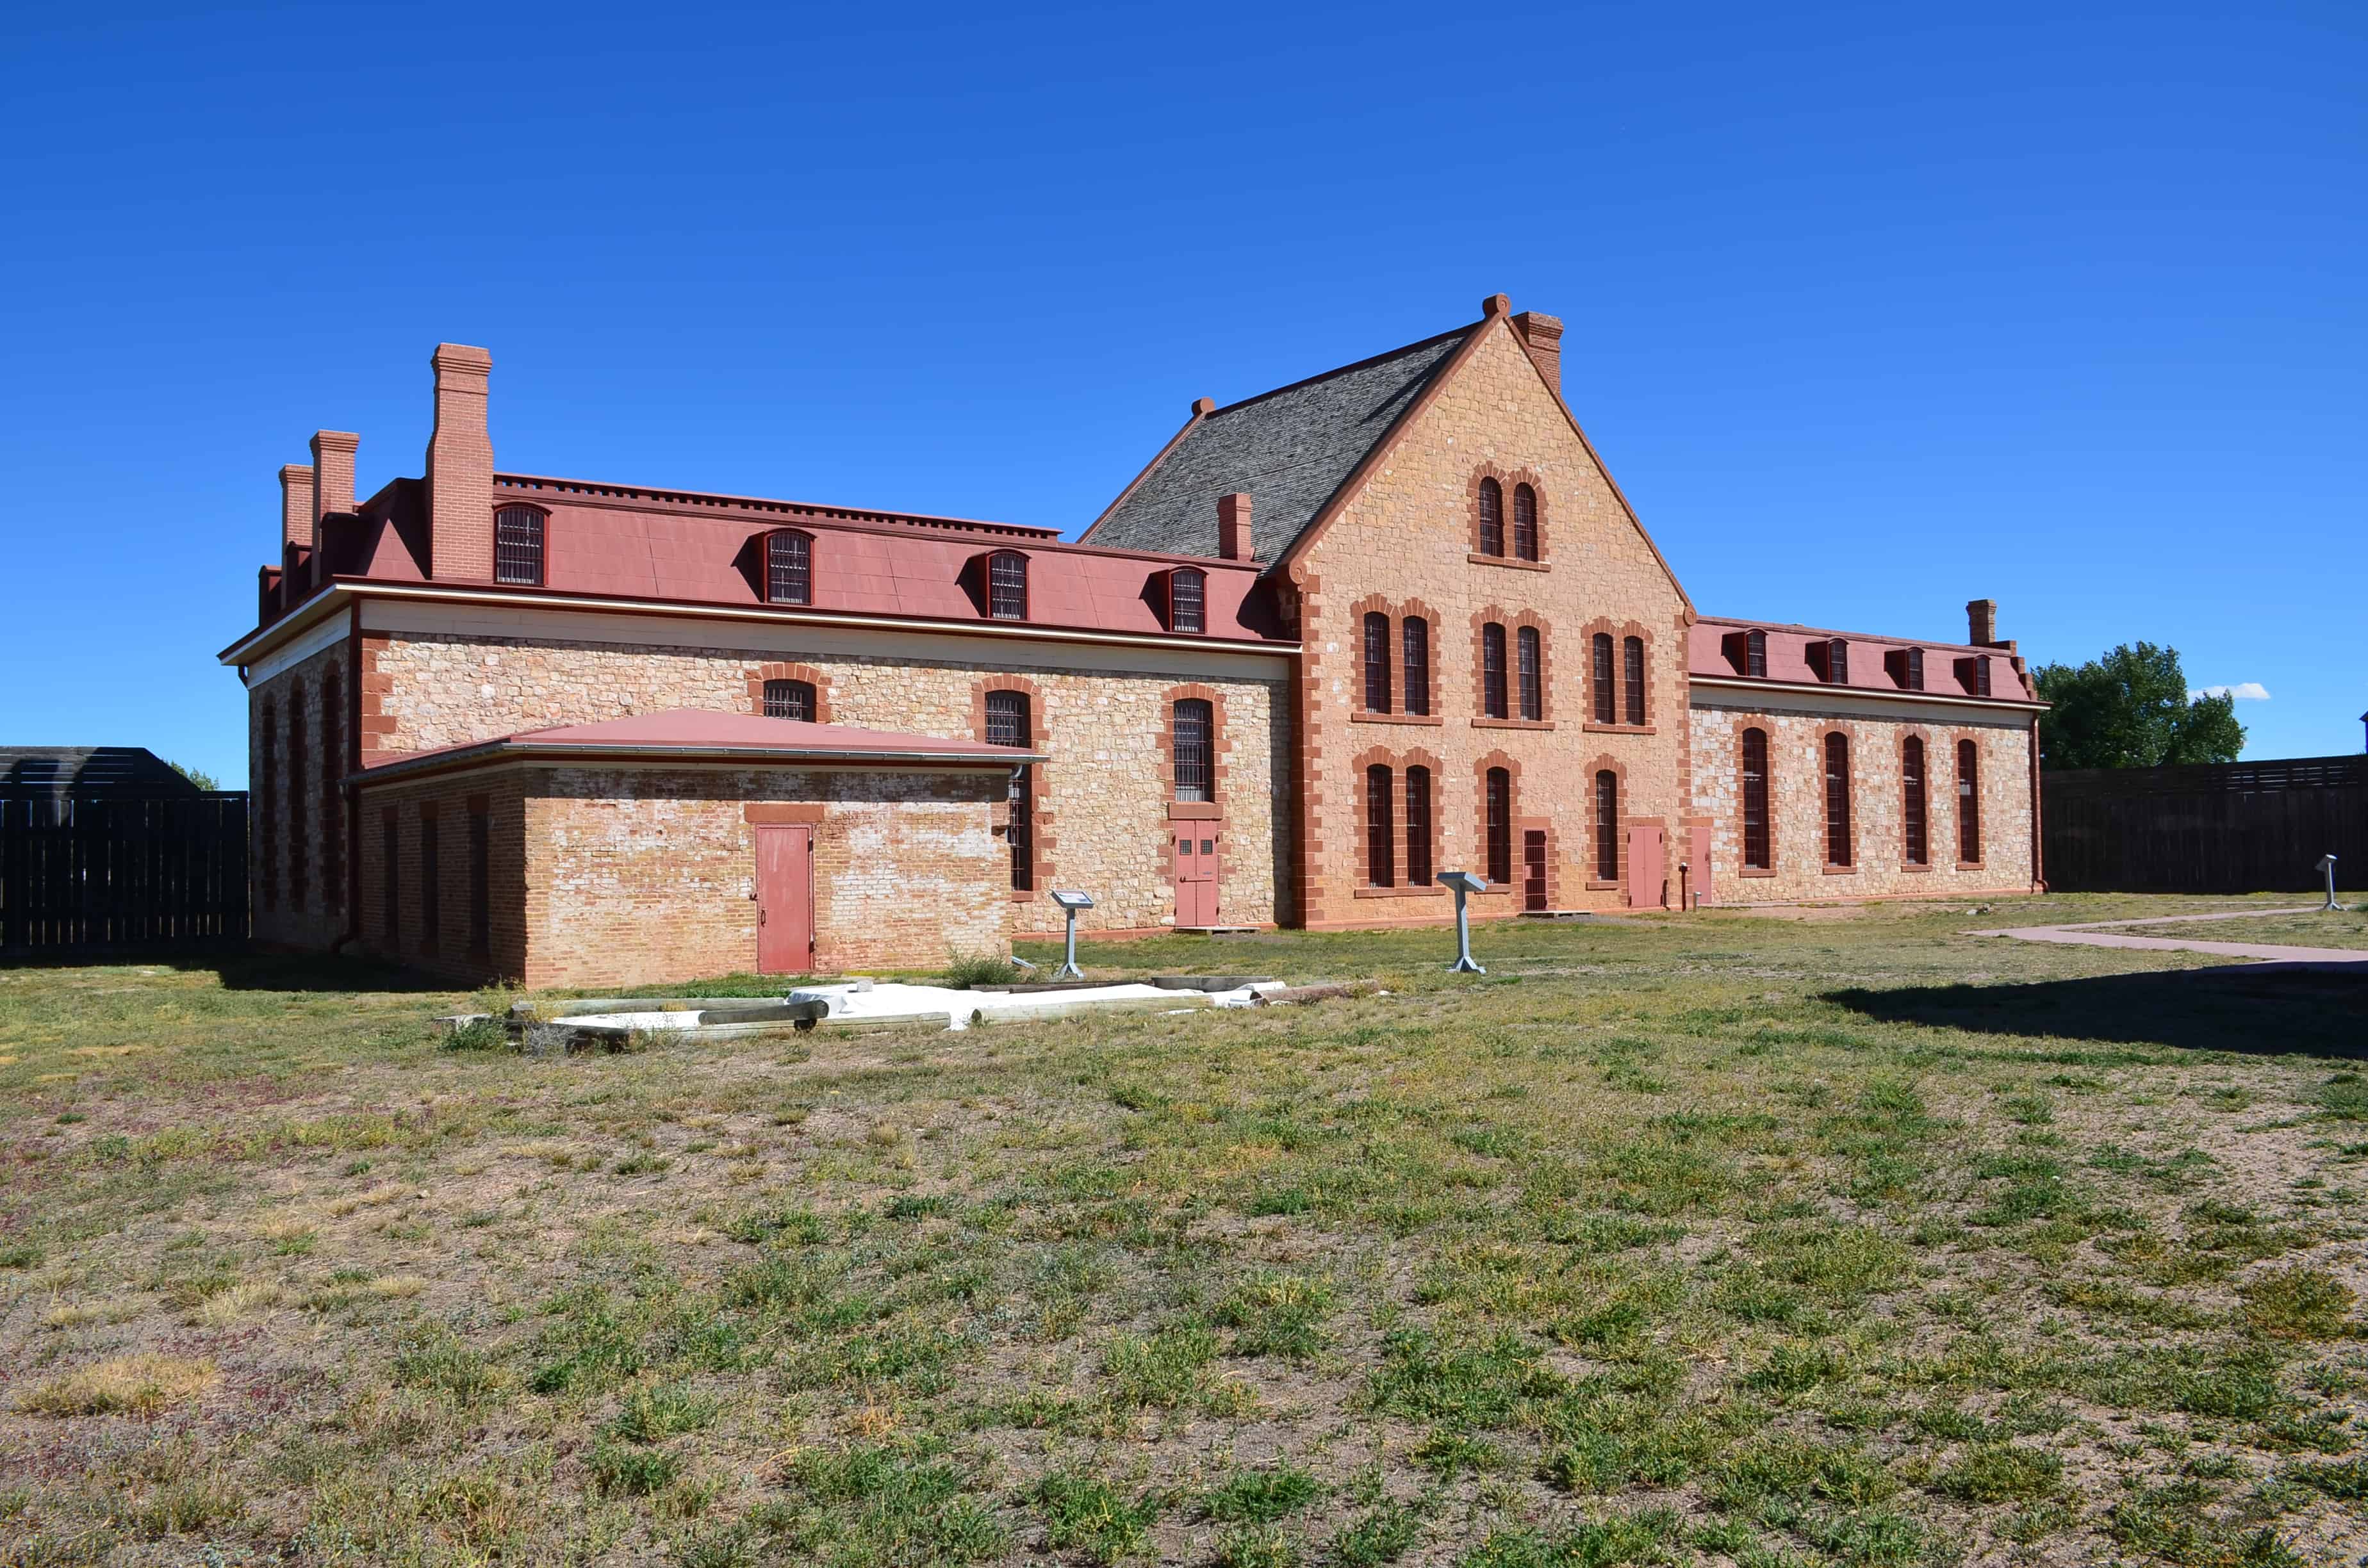 Wyoming Territorial Prison State Historic Site in Laramie